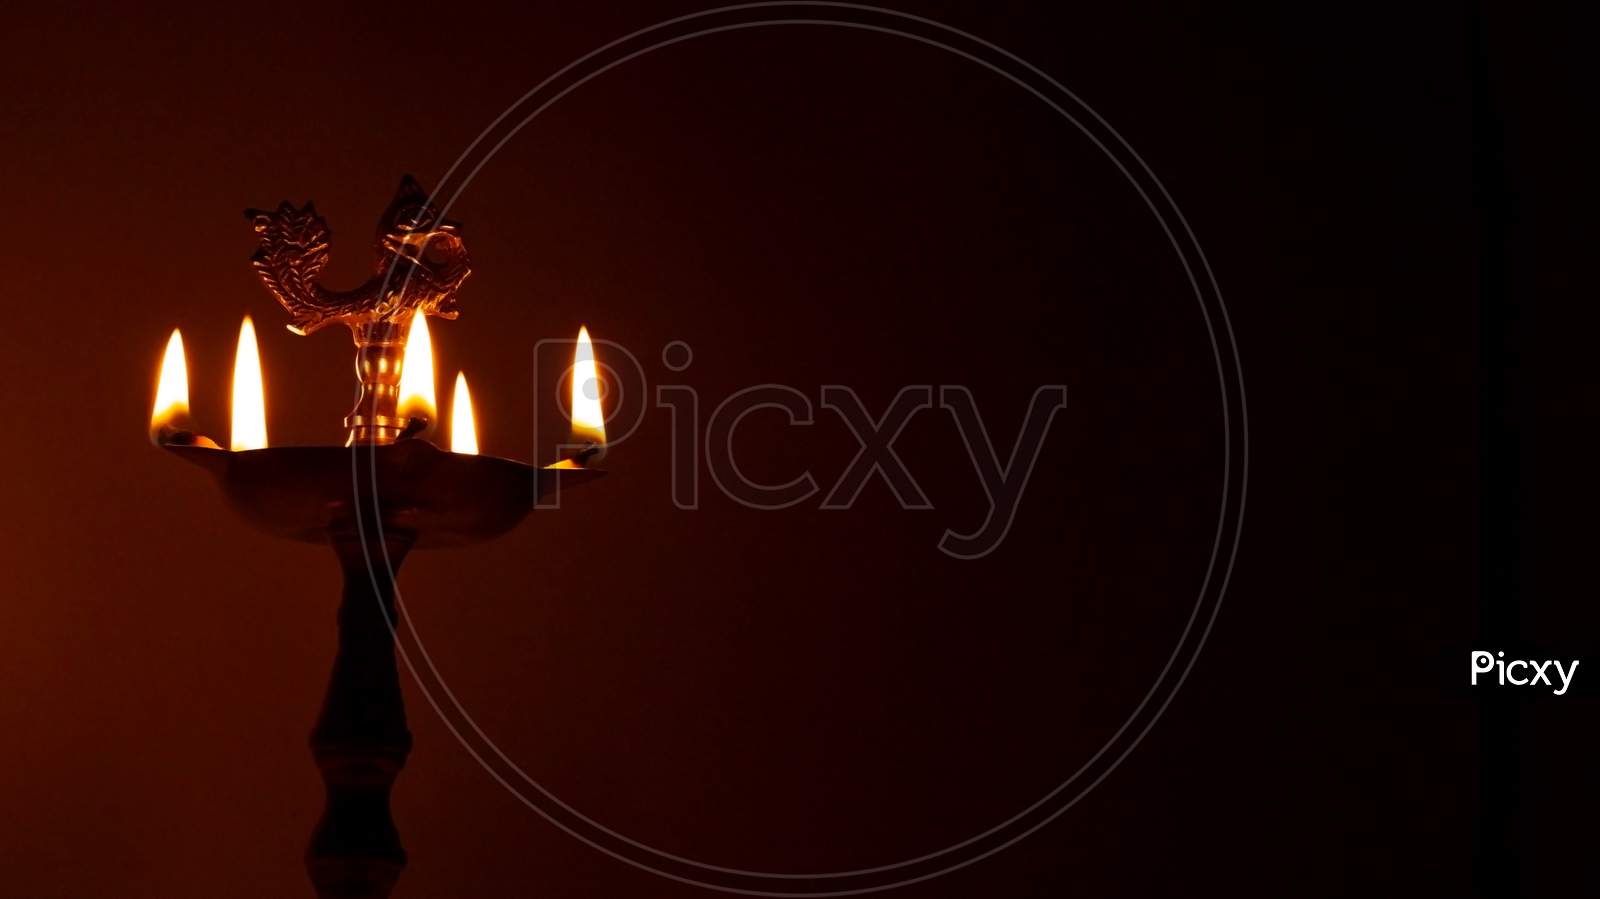 Diwali celebration with burning oil lamp